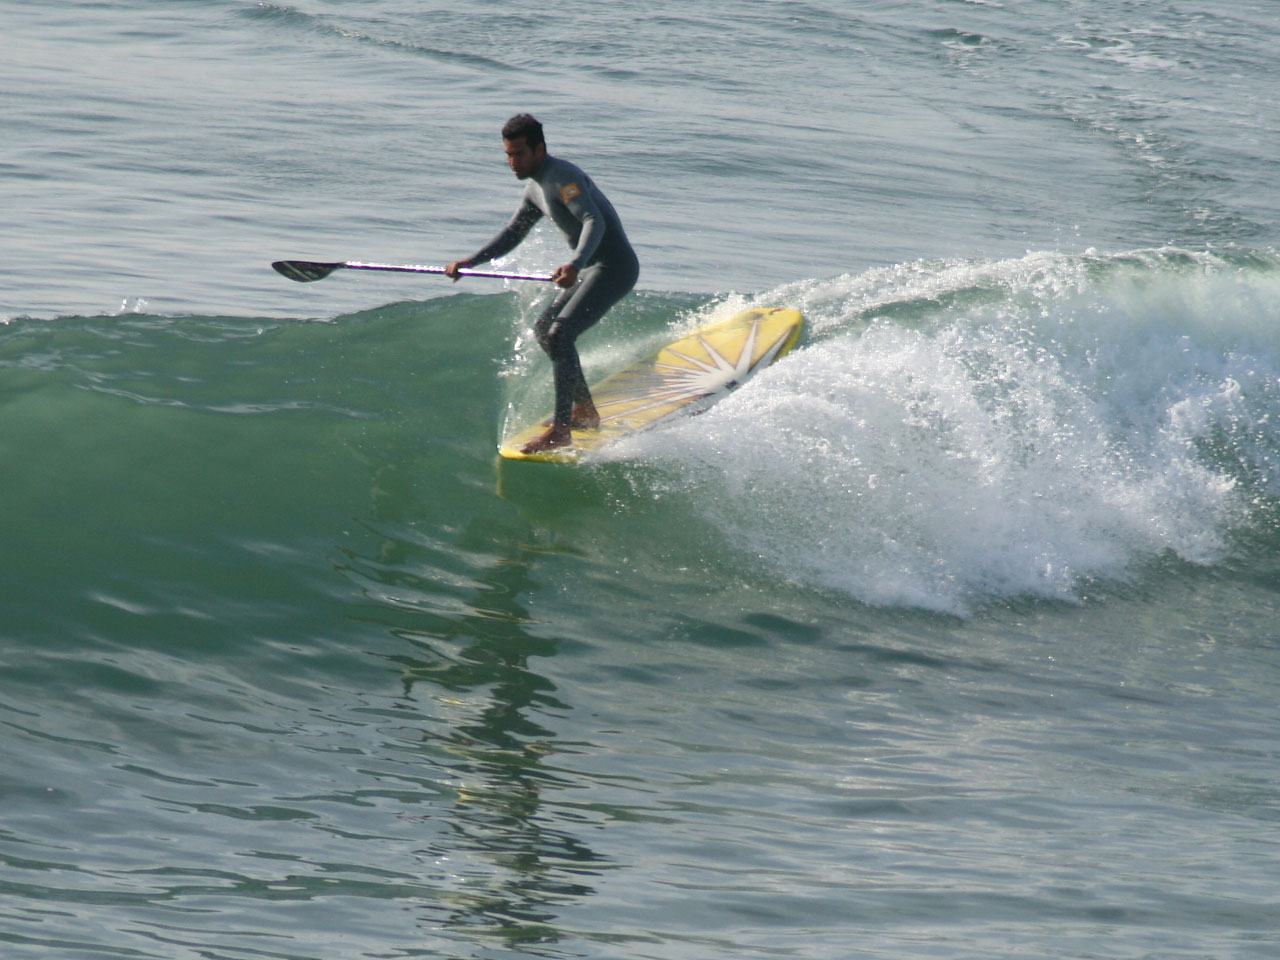 Paddleboard Surfer Hangs Five